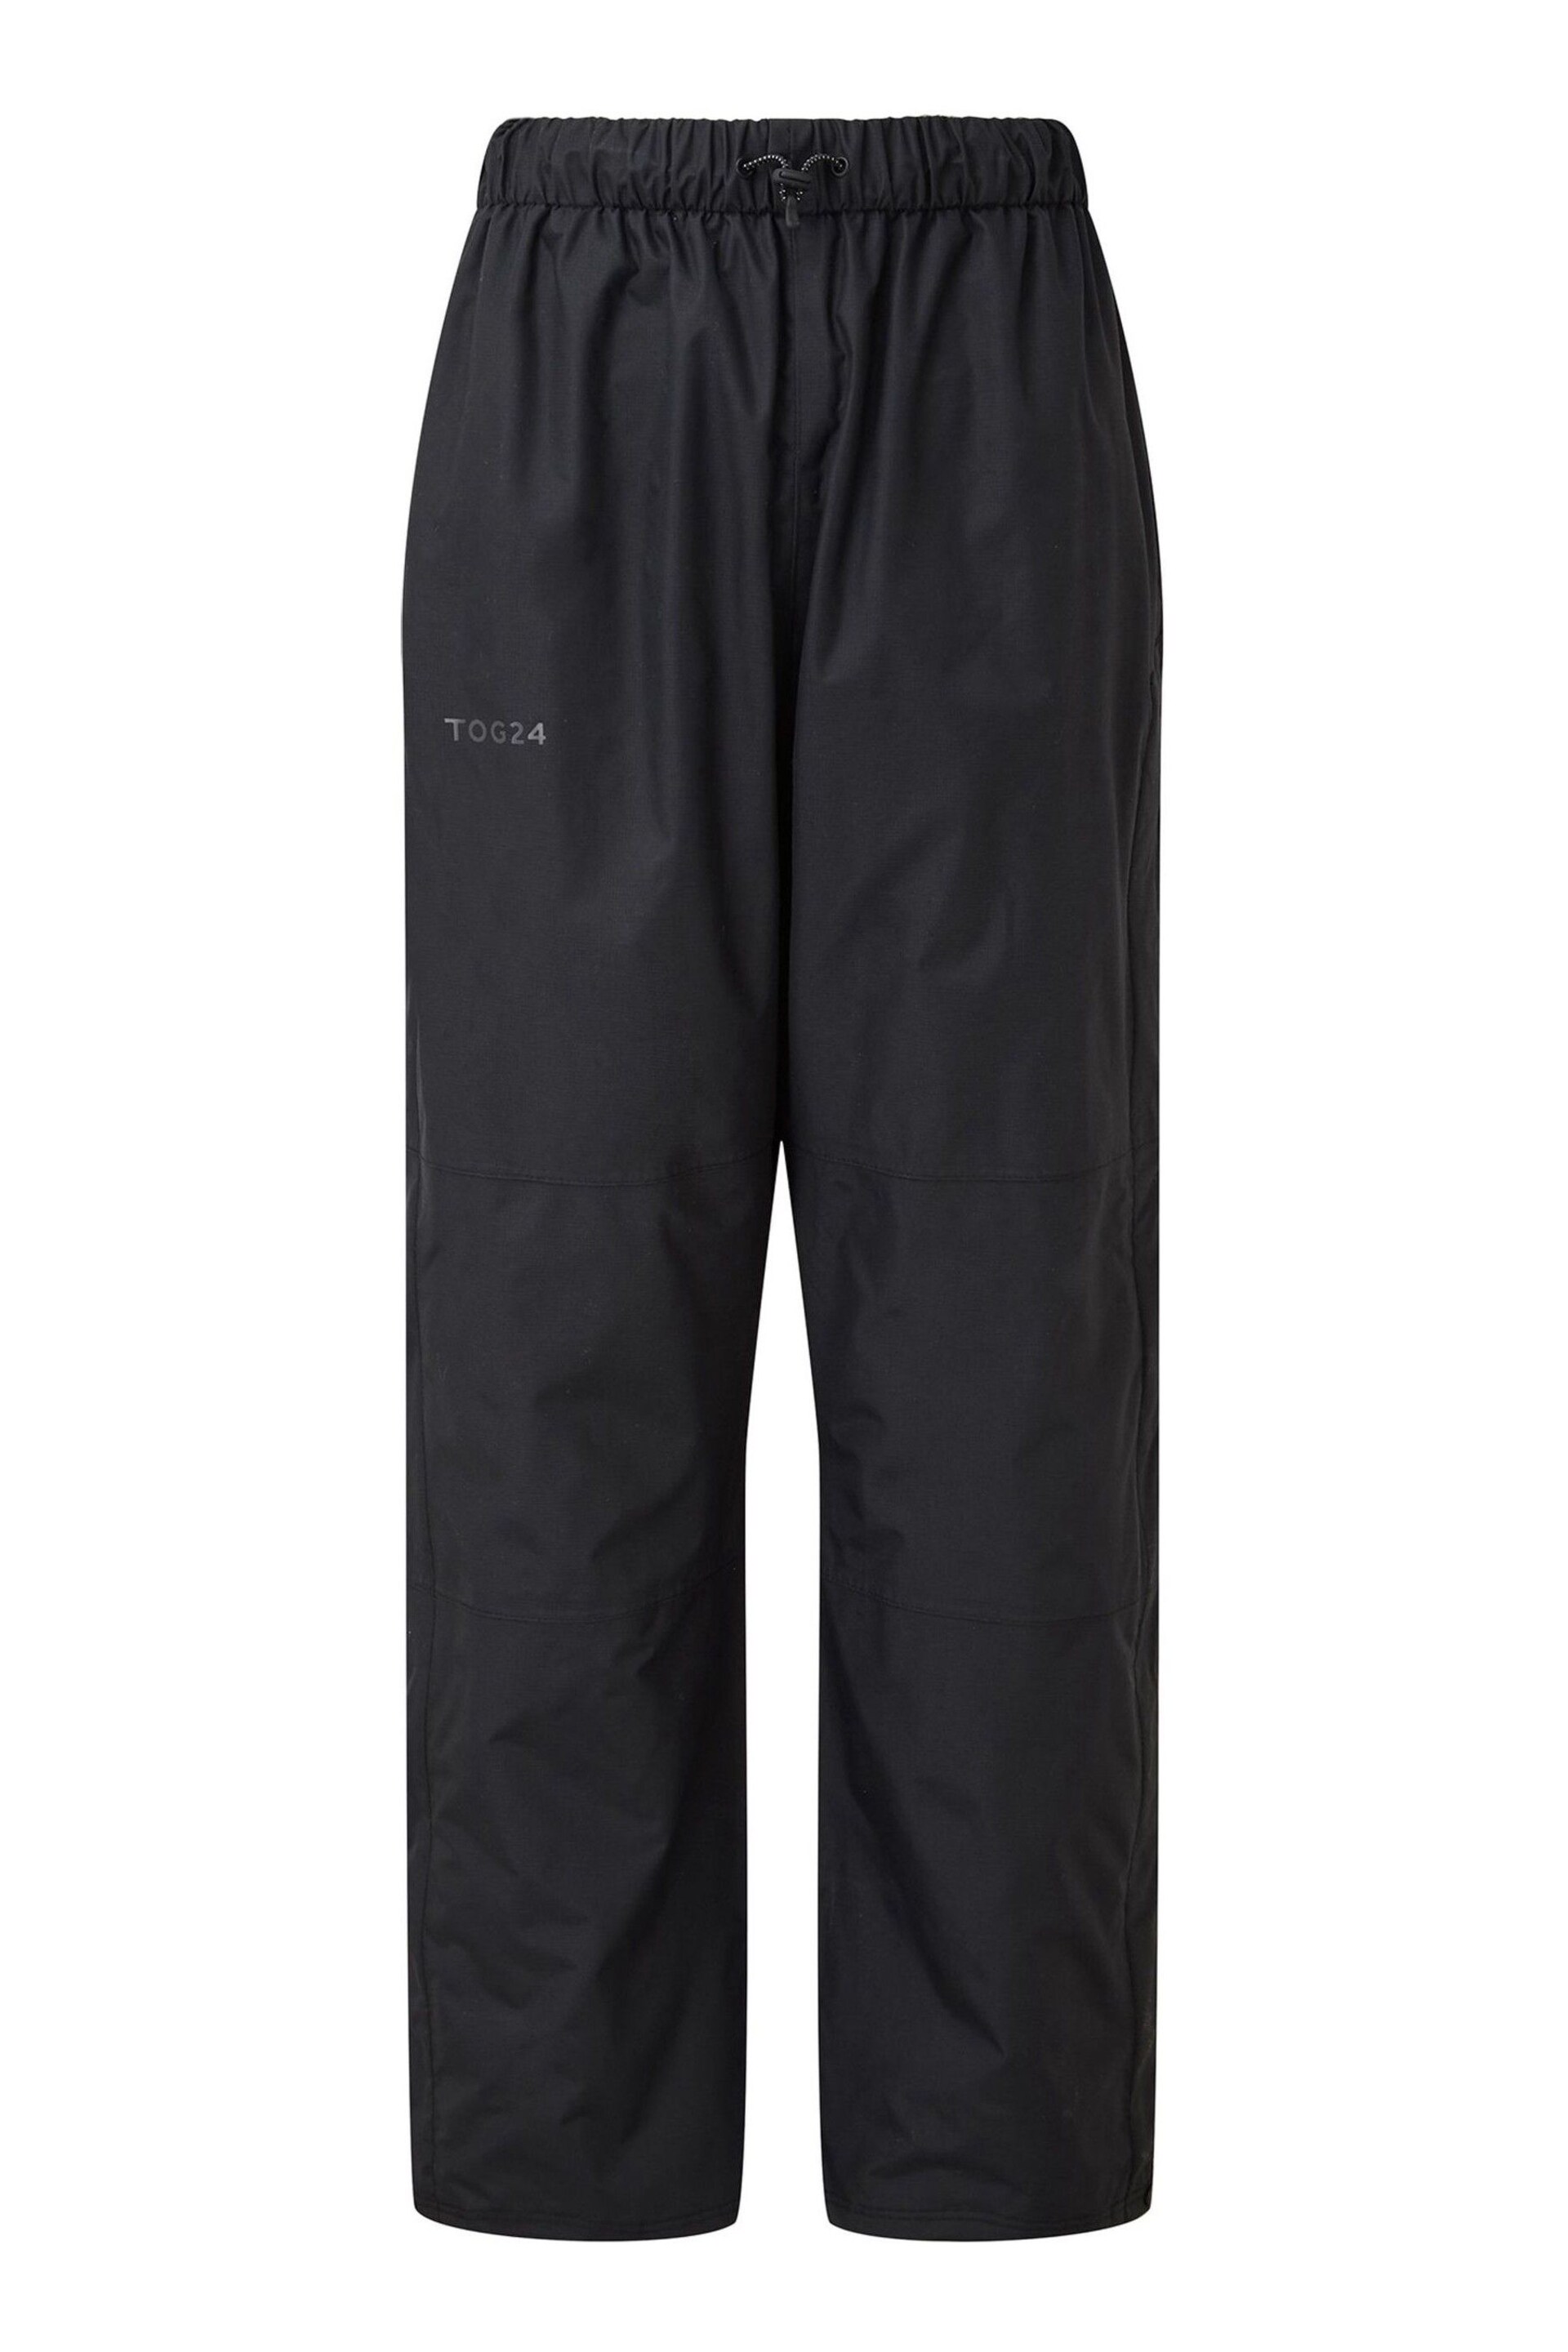 Tog 24 Charcoal Black Steward Waterproof Regular Ski Trousers - Image 4 of 4